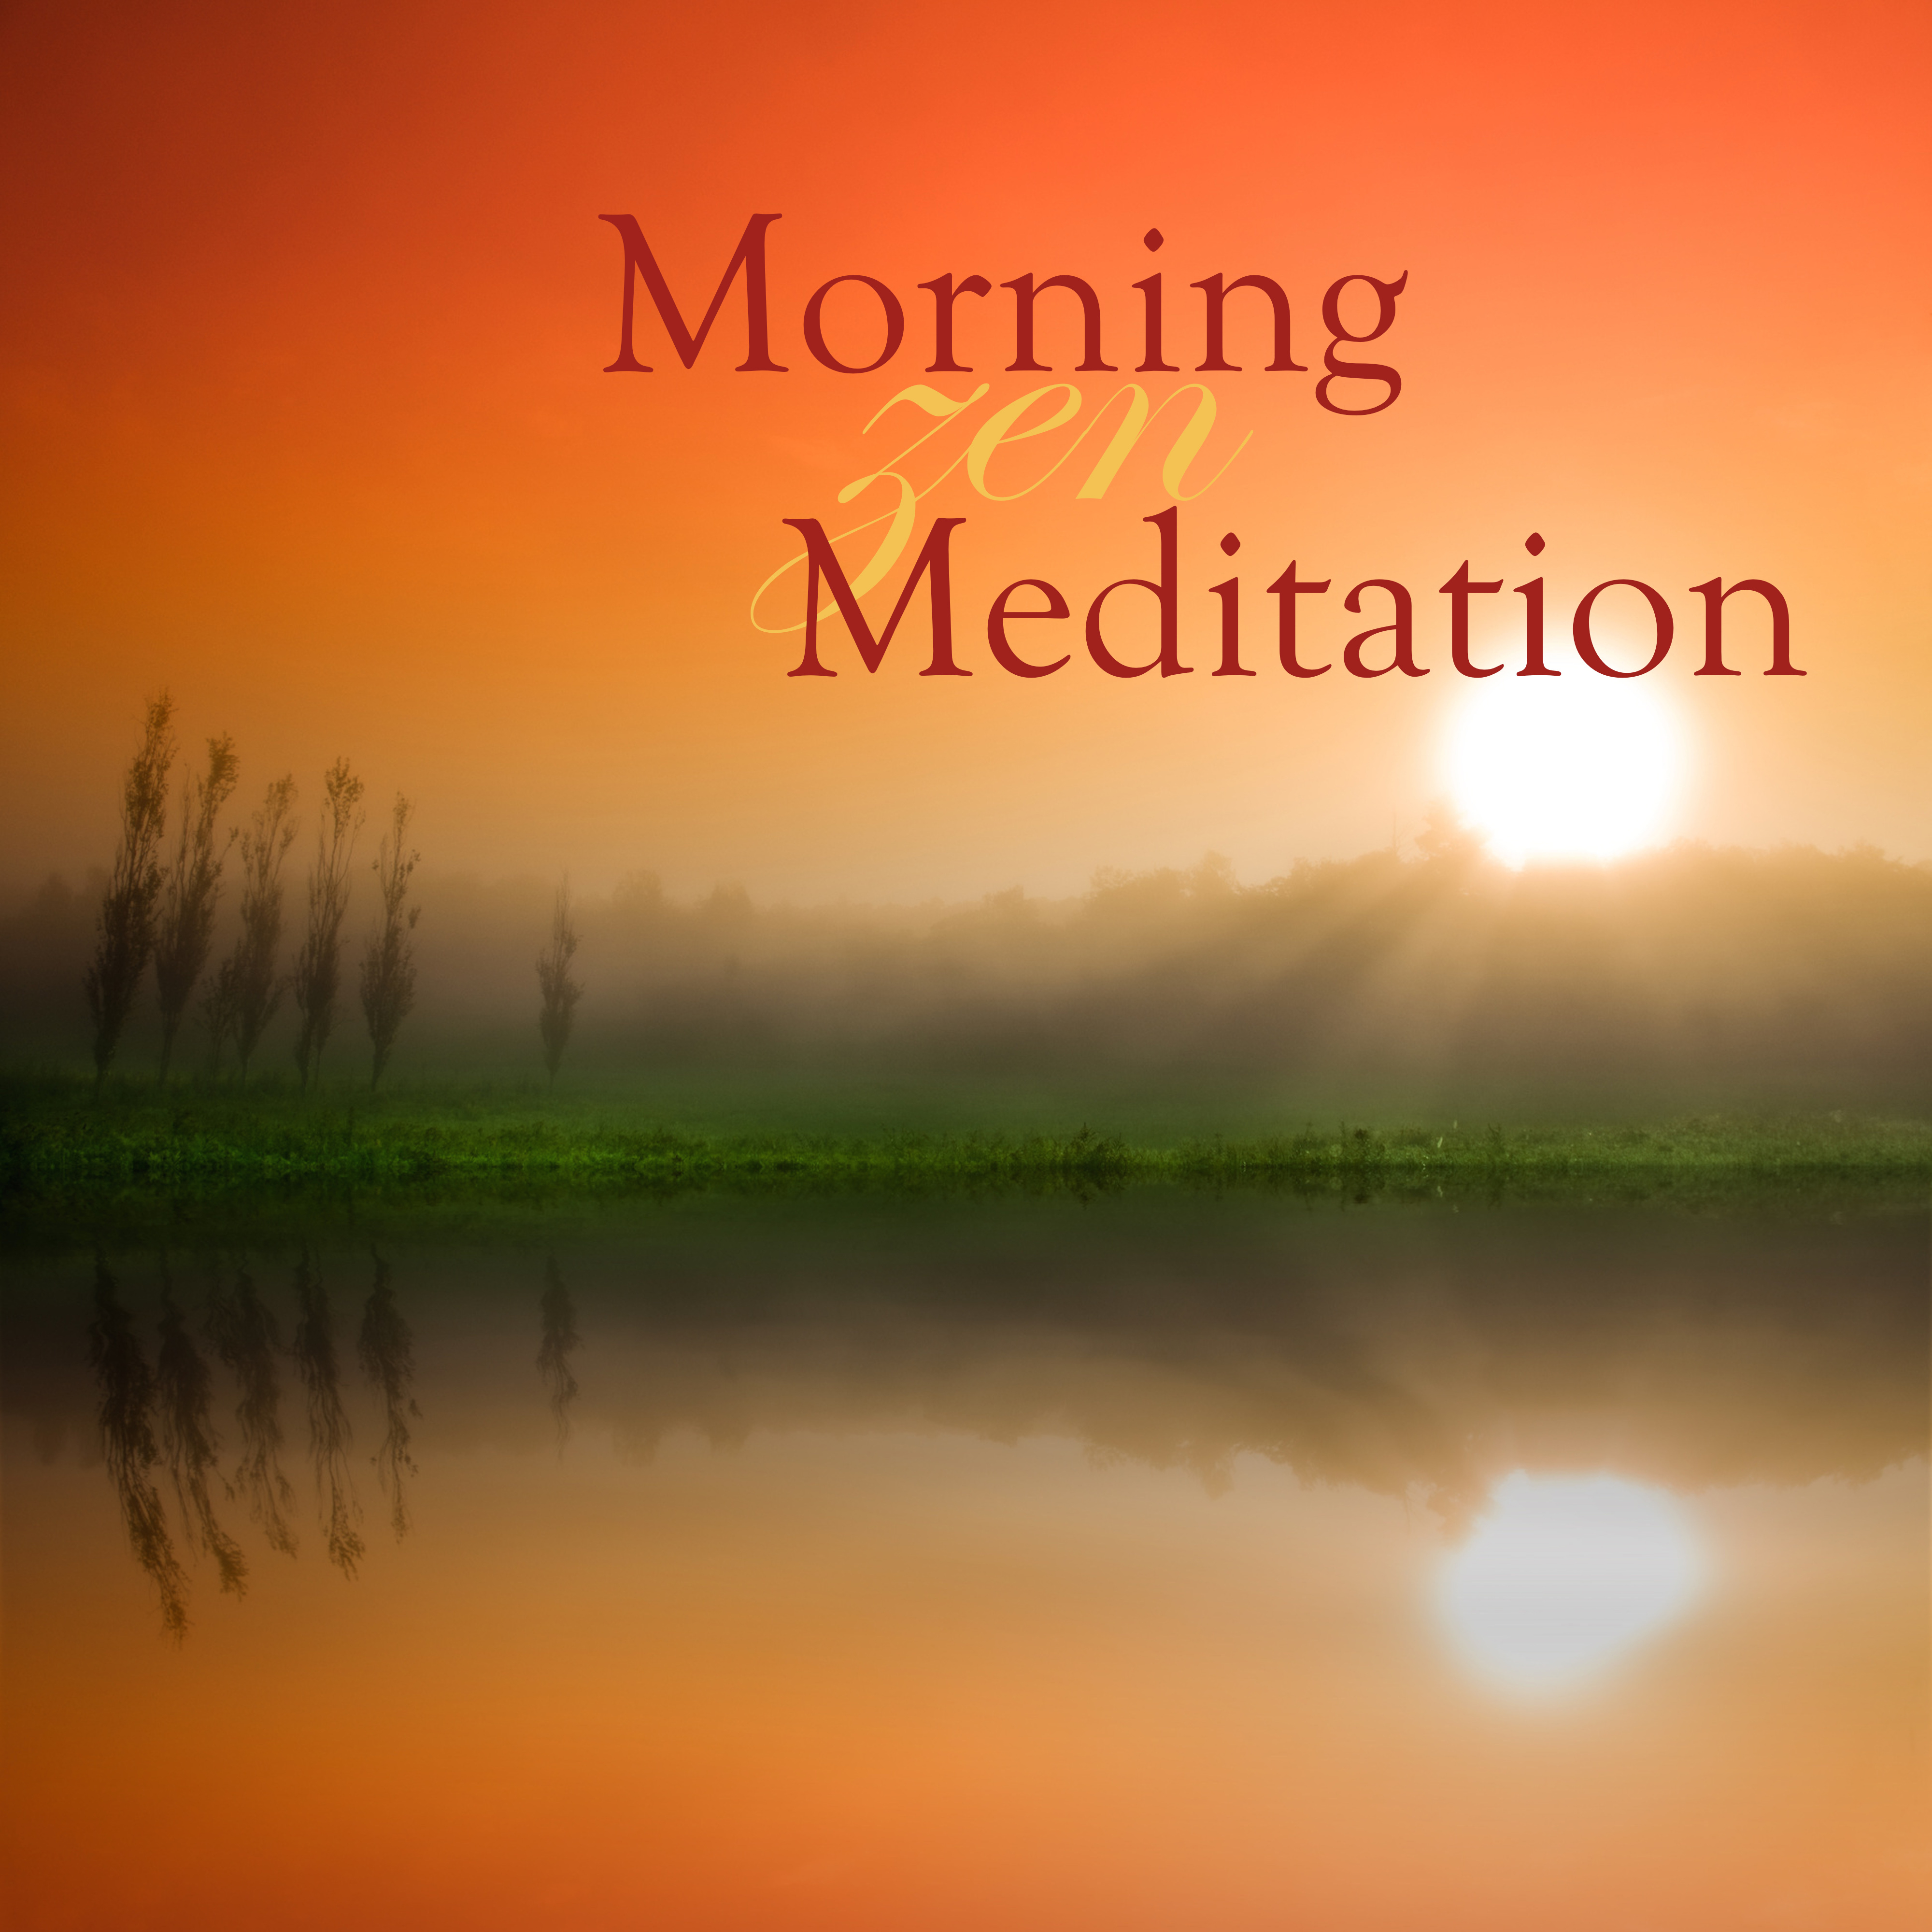 Morning Zen Meditation - Deep Buddhist Meditation Music with Nature Sounds for Spiritual Awakening